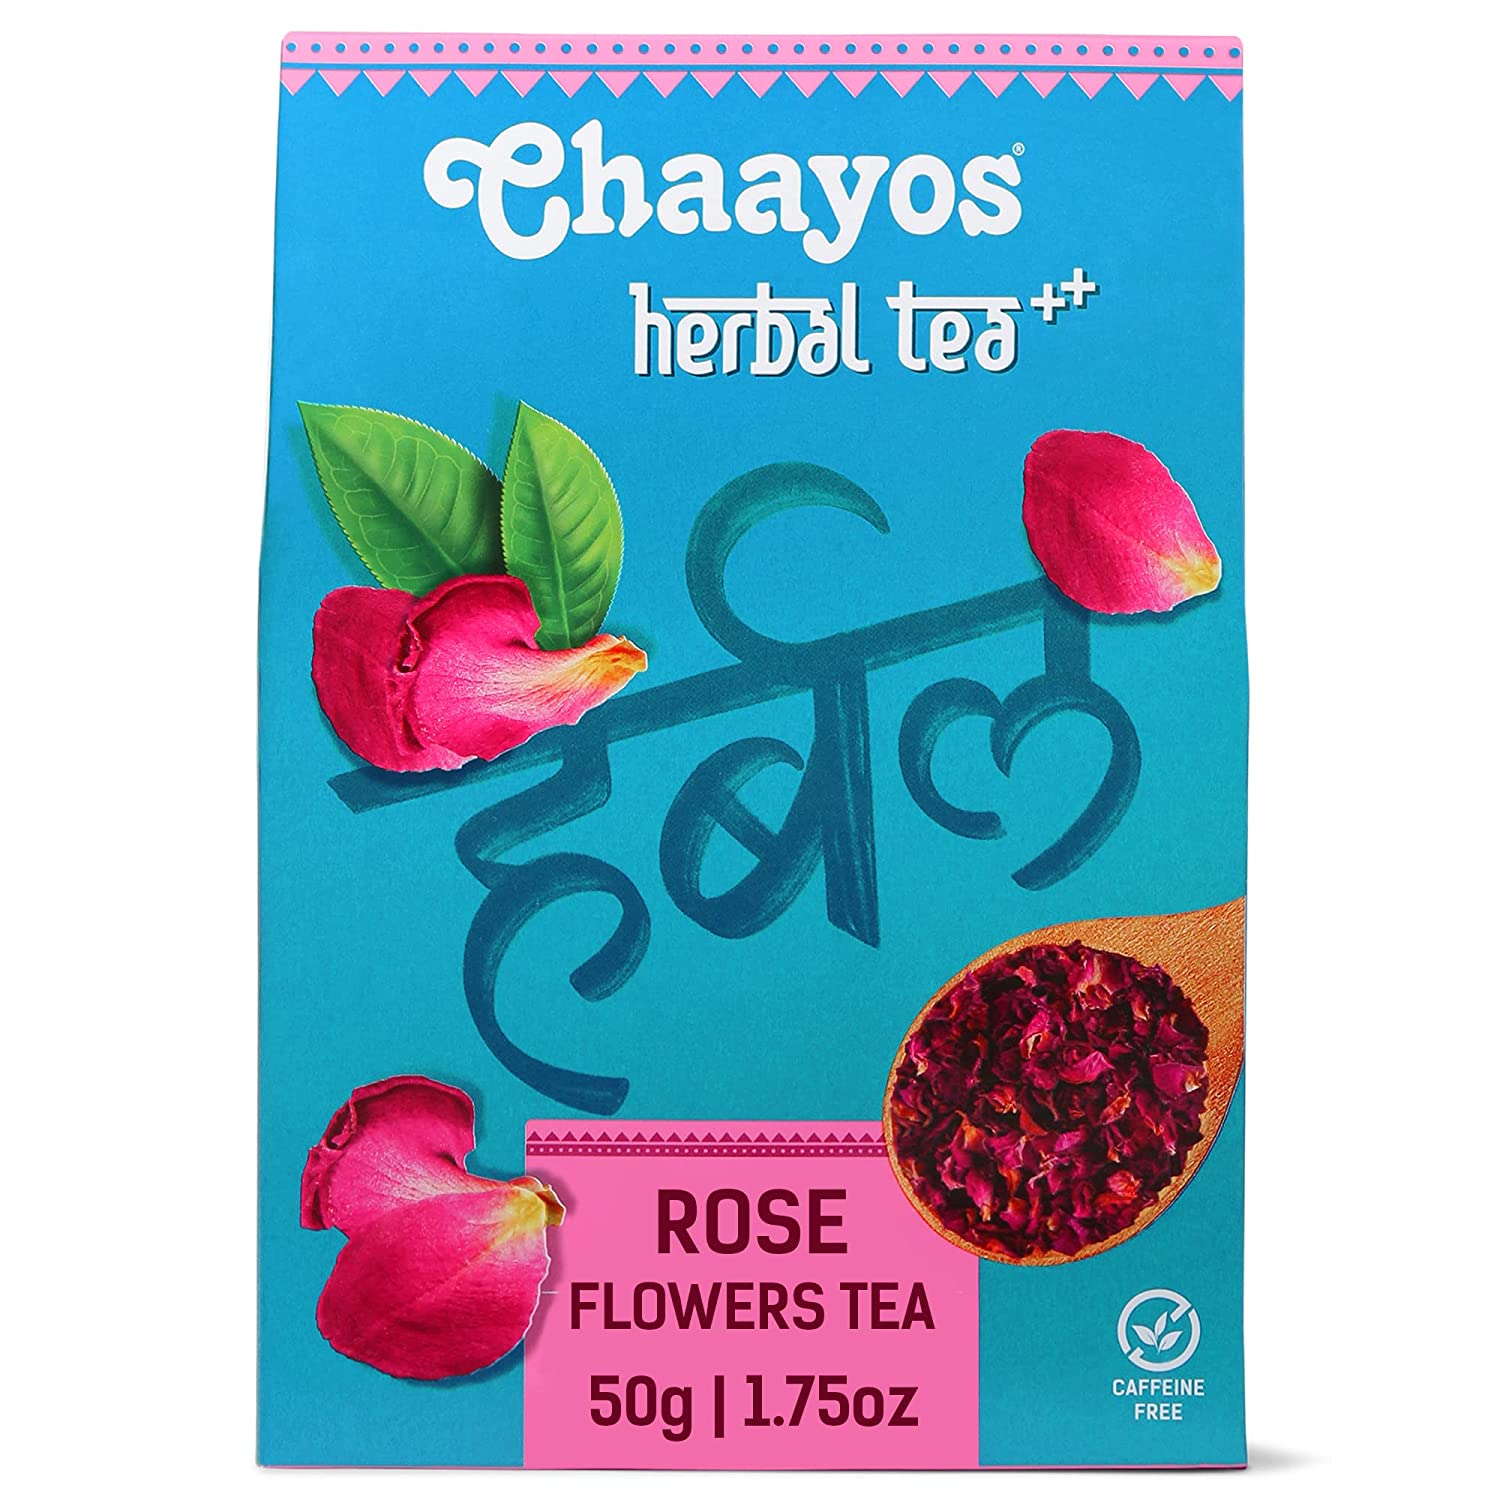 Rose Tea - Sun Dried Rose Petals (50g)